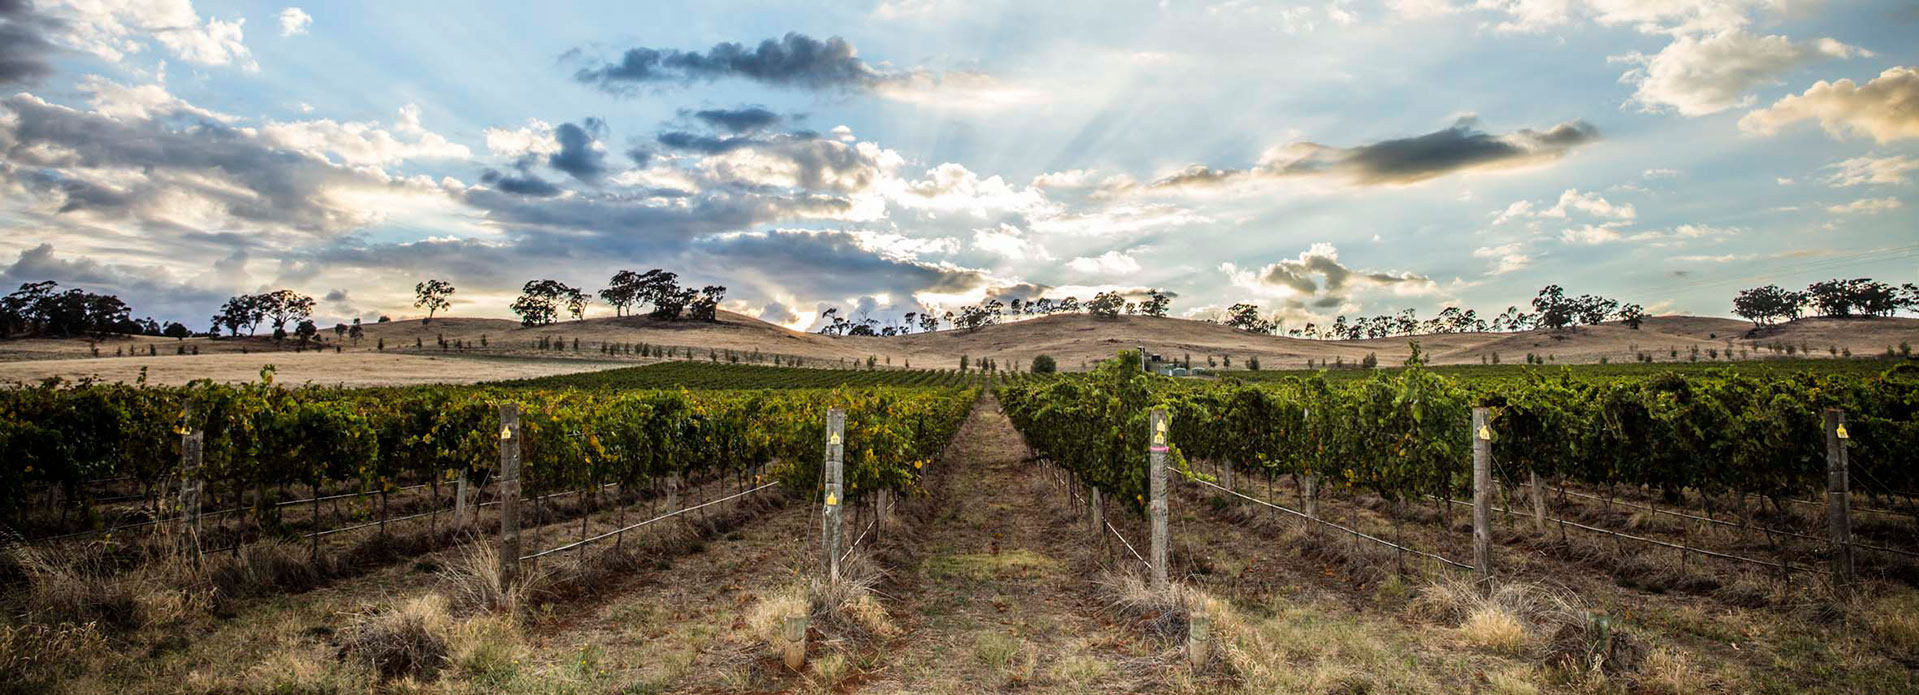 Sunrise over the organic vineyards at Tellurian winery in the Heathcote region of Victoria, Australia.